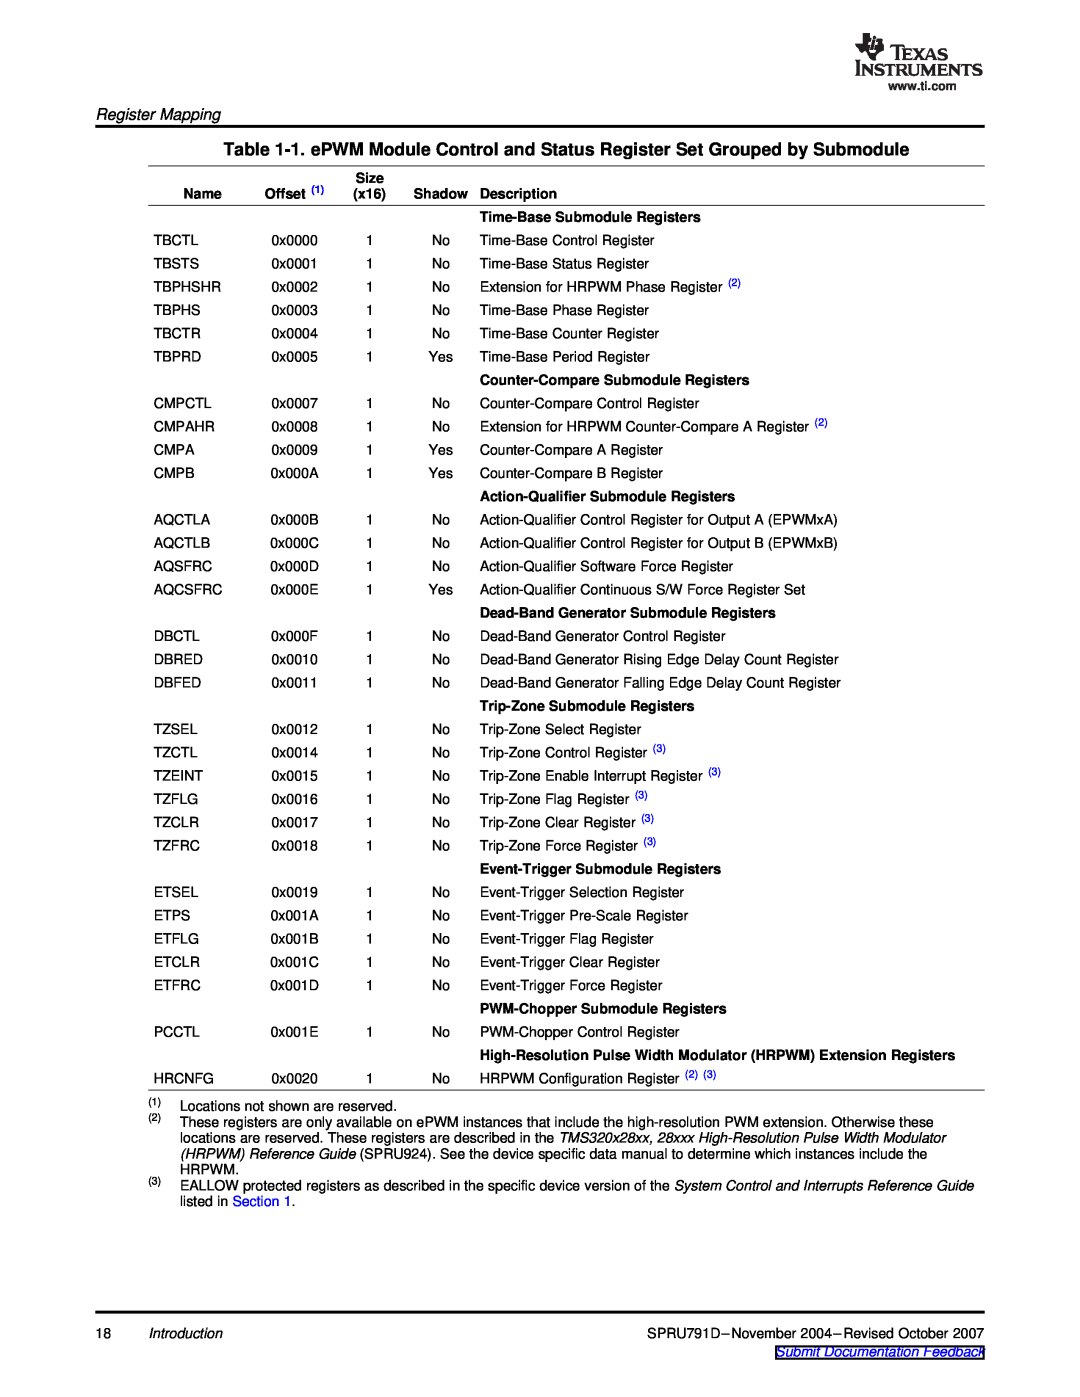 Texas Instruments TMS320x28xx, 28xxx manual Register Mapping, Offset, Submit Documentation Feedback 